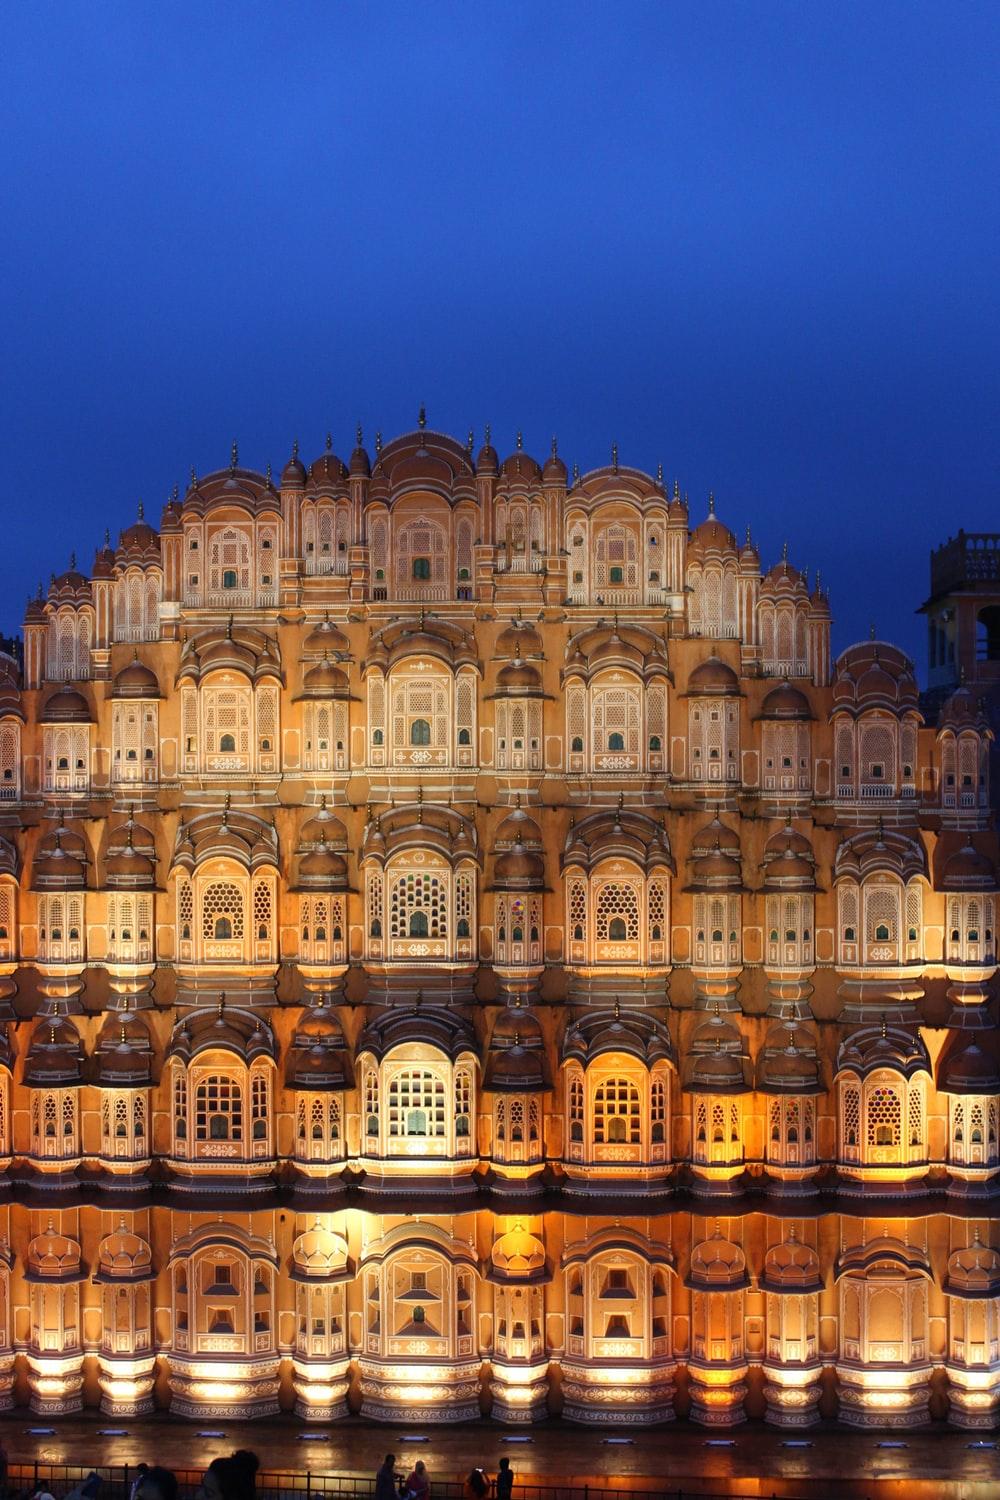 Stunning India Photo. Download Free Image